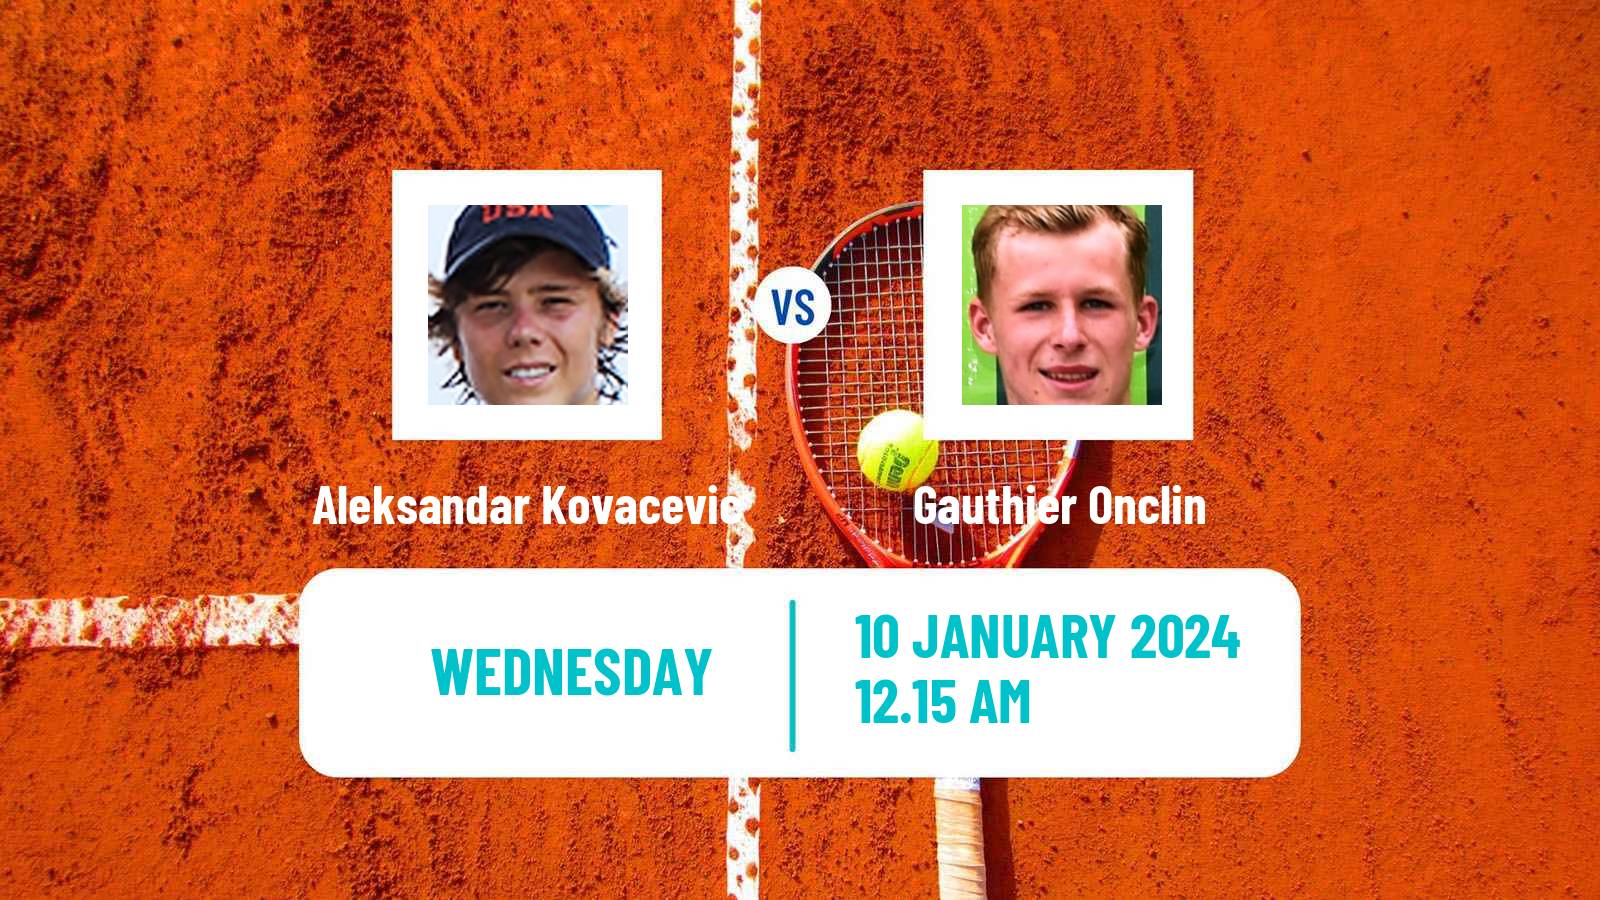 Tennis ATP Australian Open Aleksandar Kovacevic - Gauthier Onclin